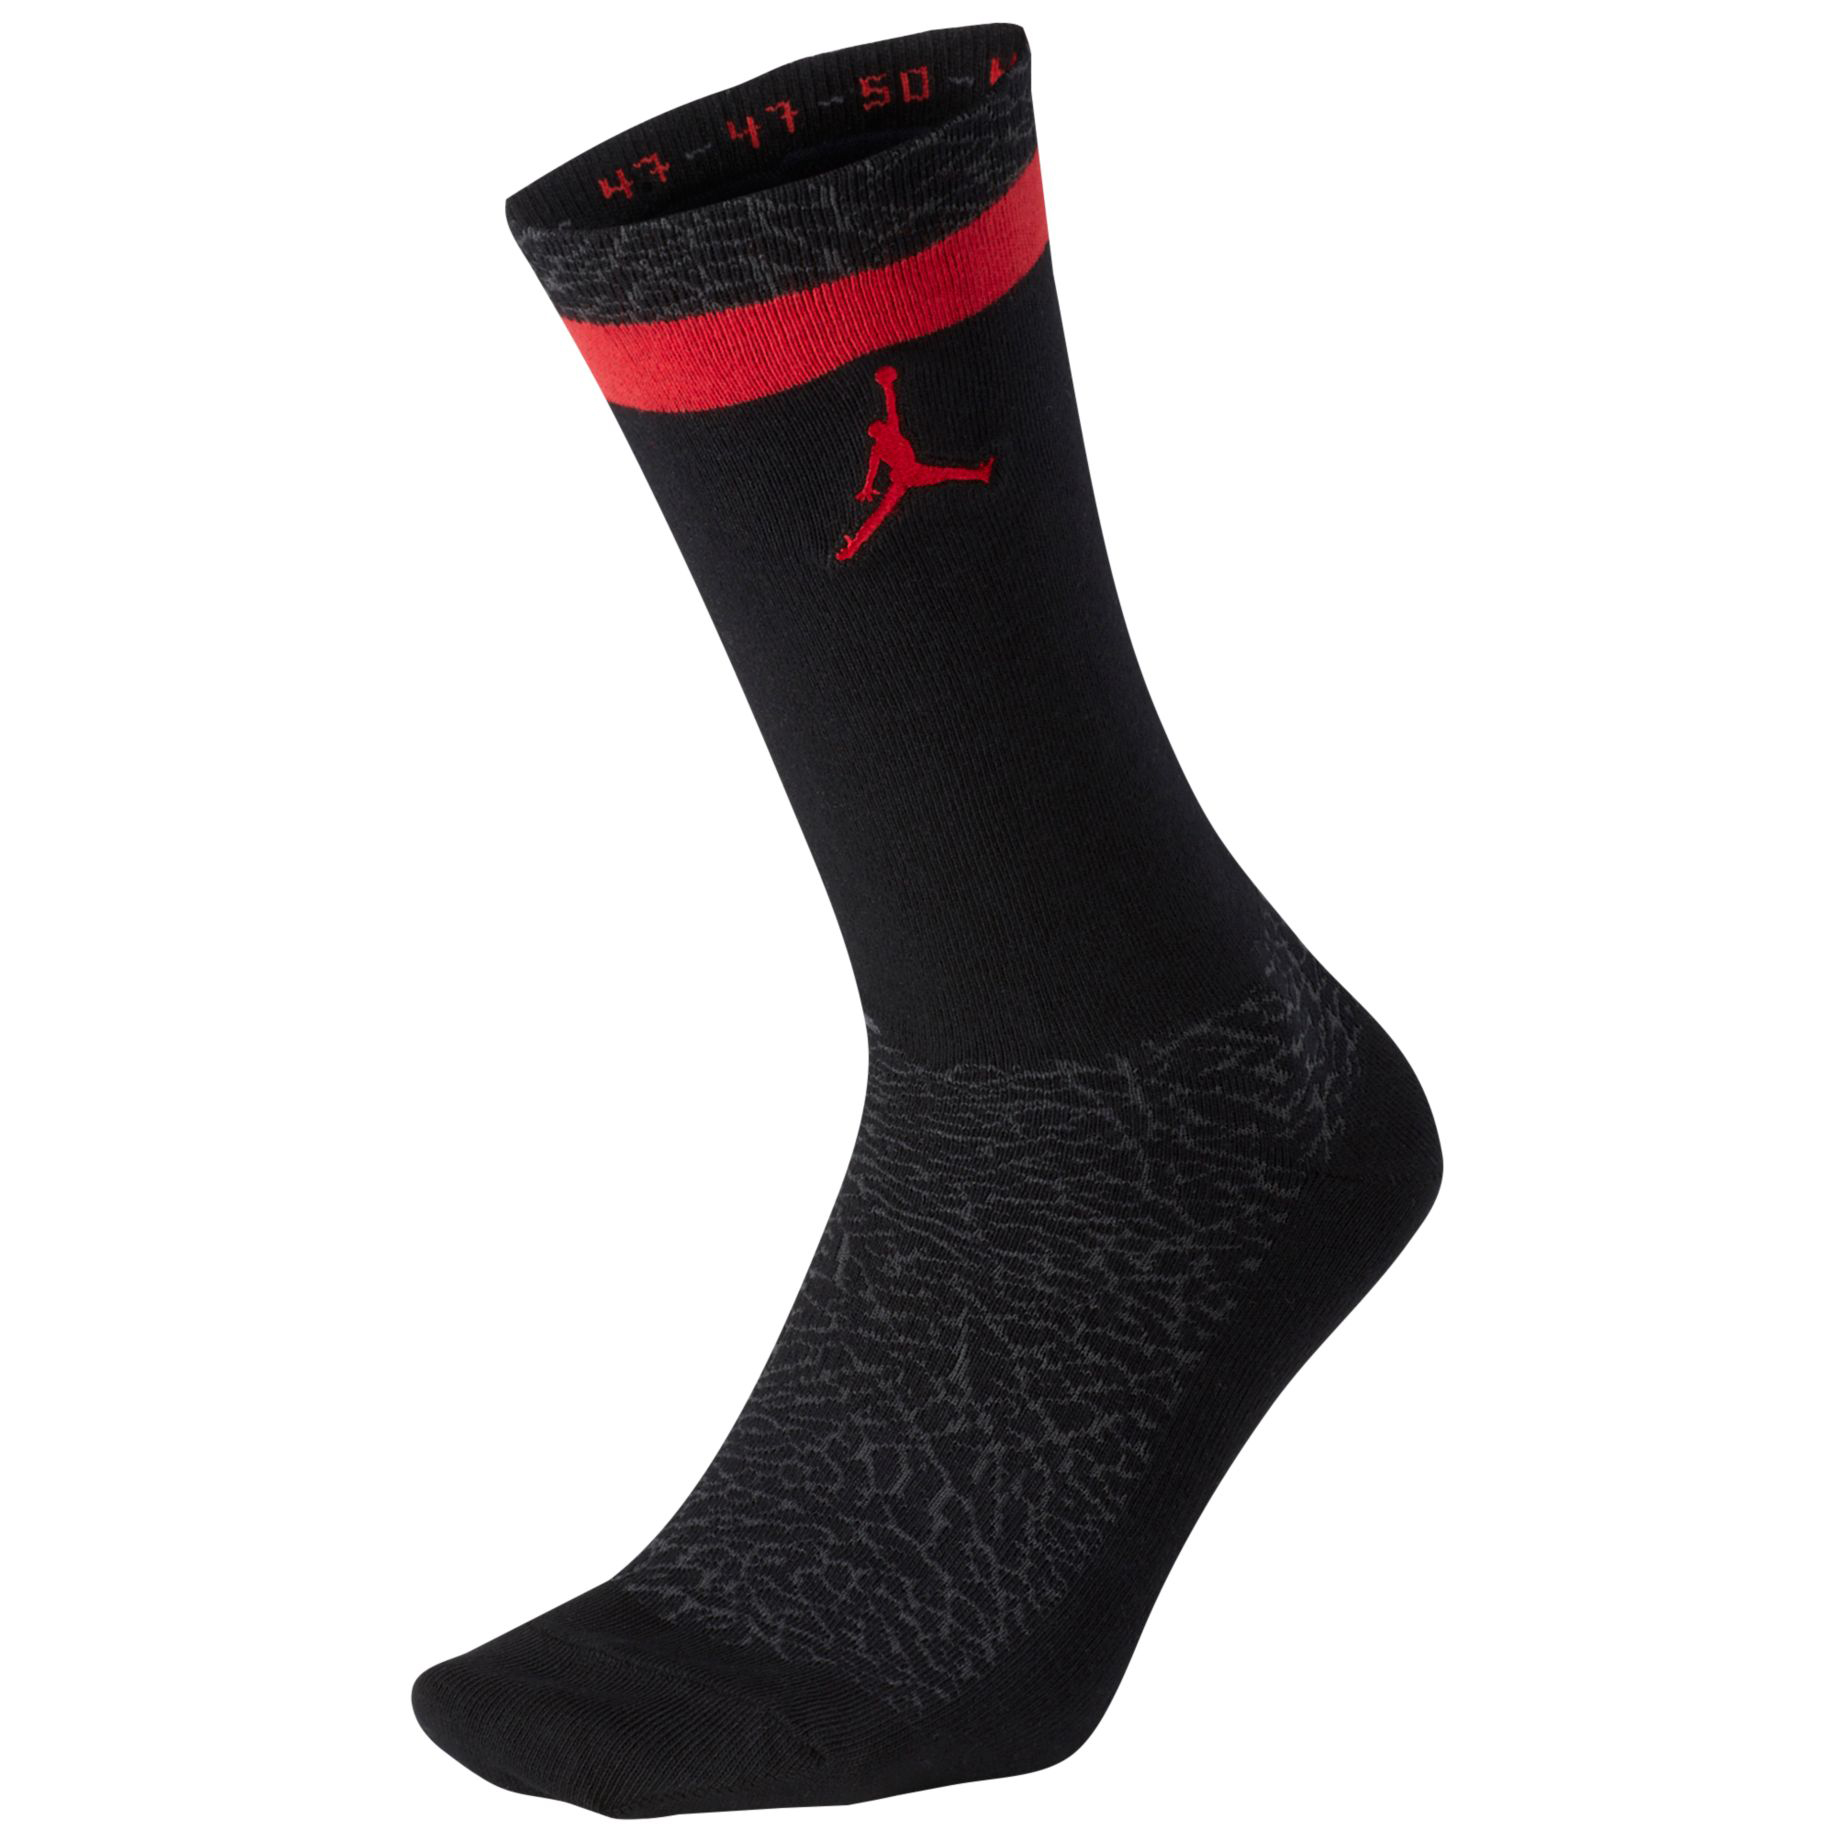 black air jordan socks